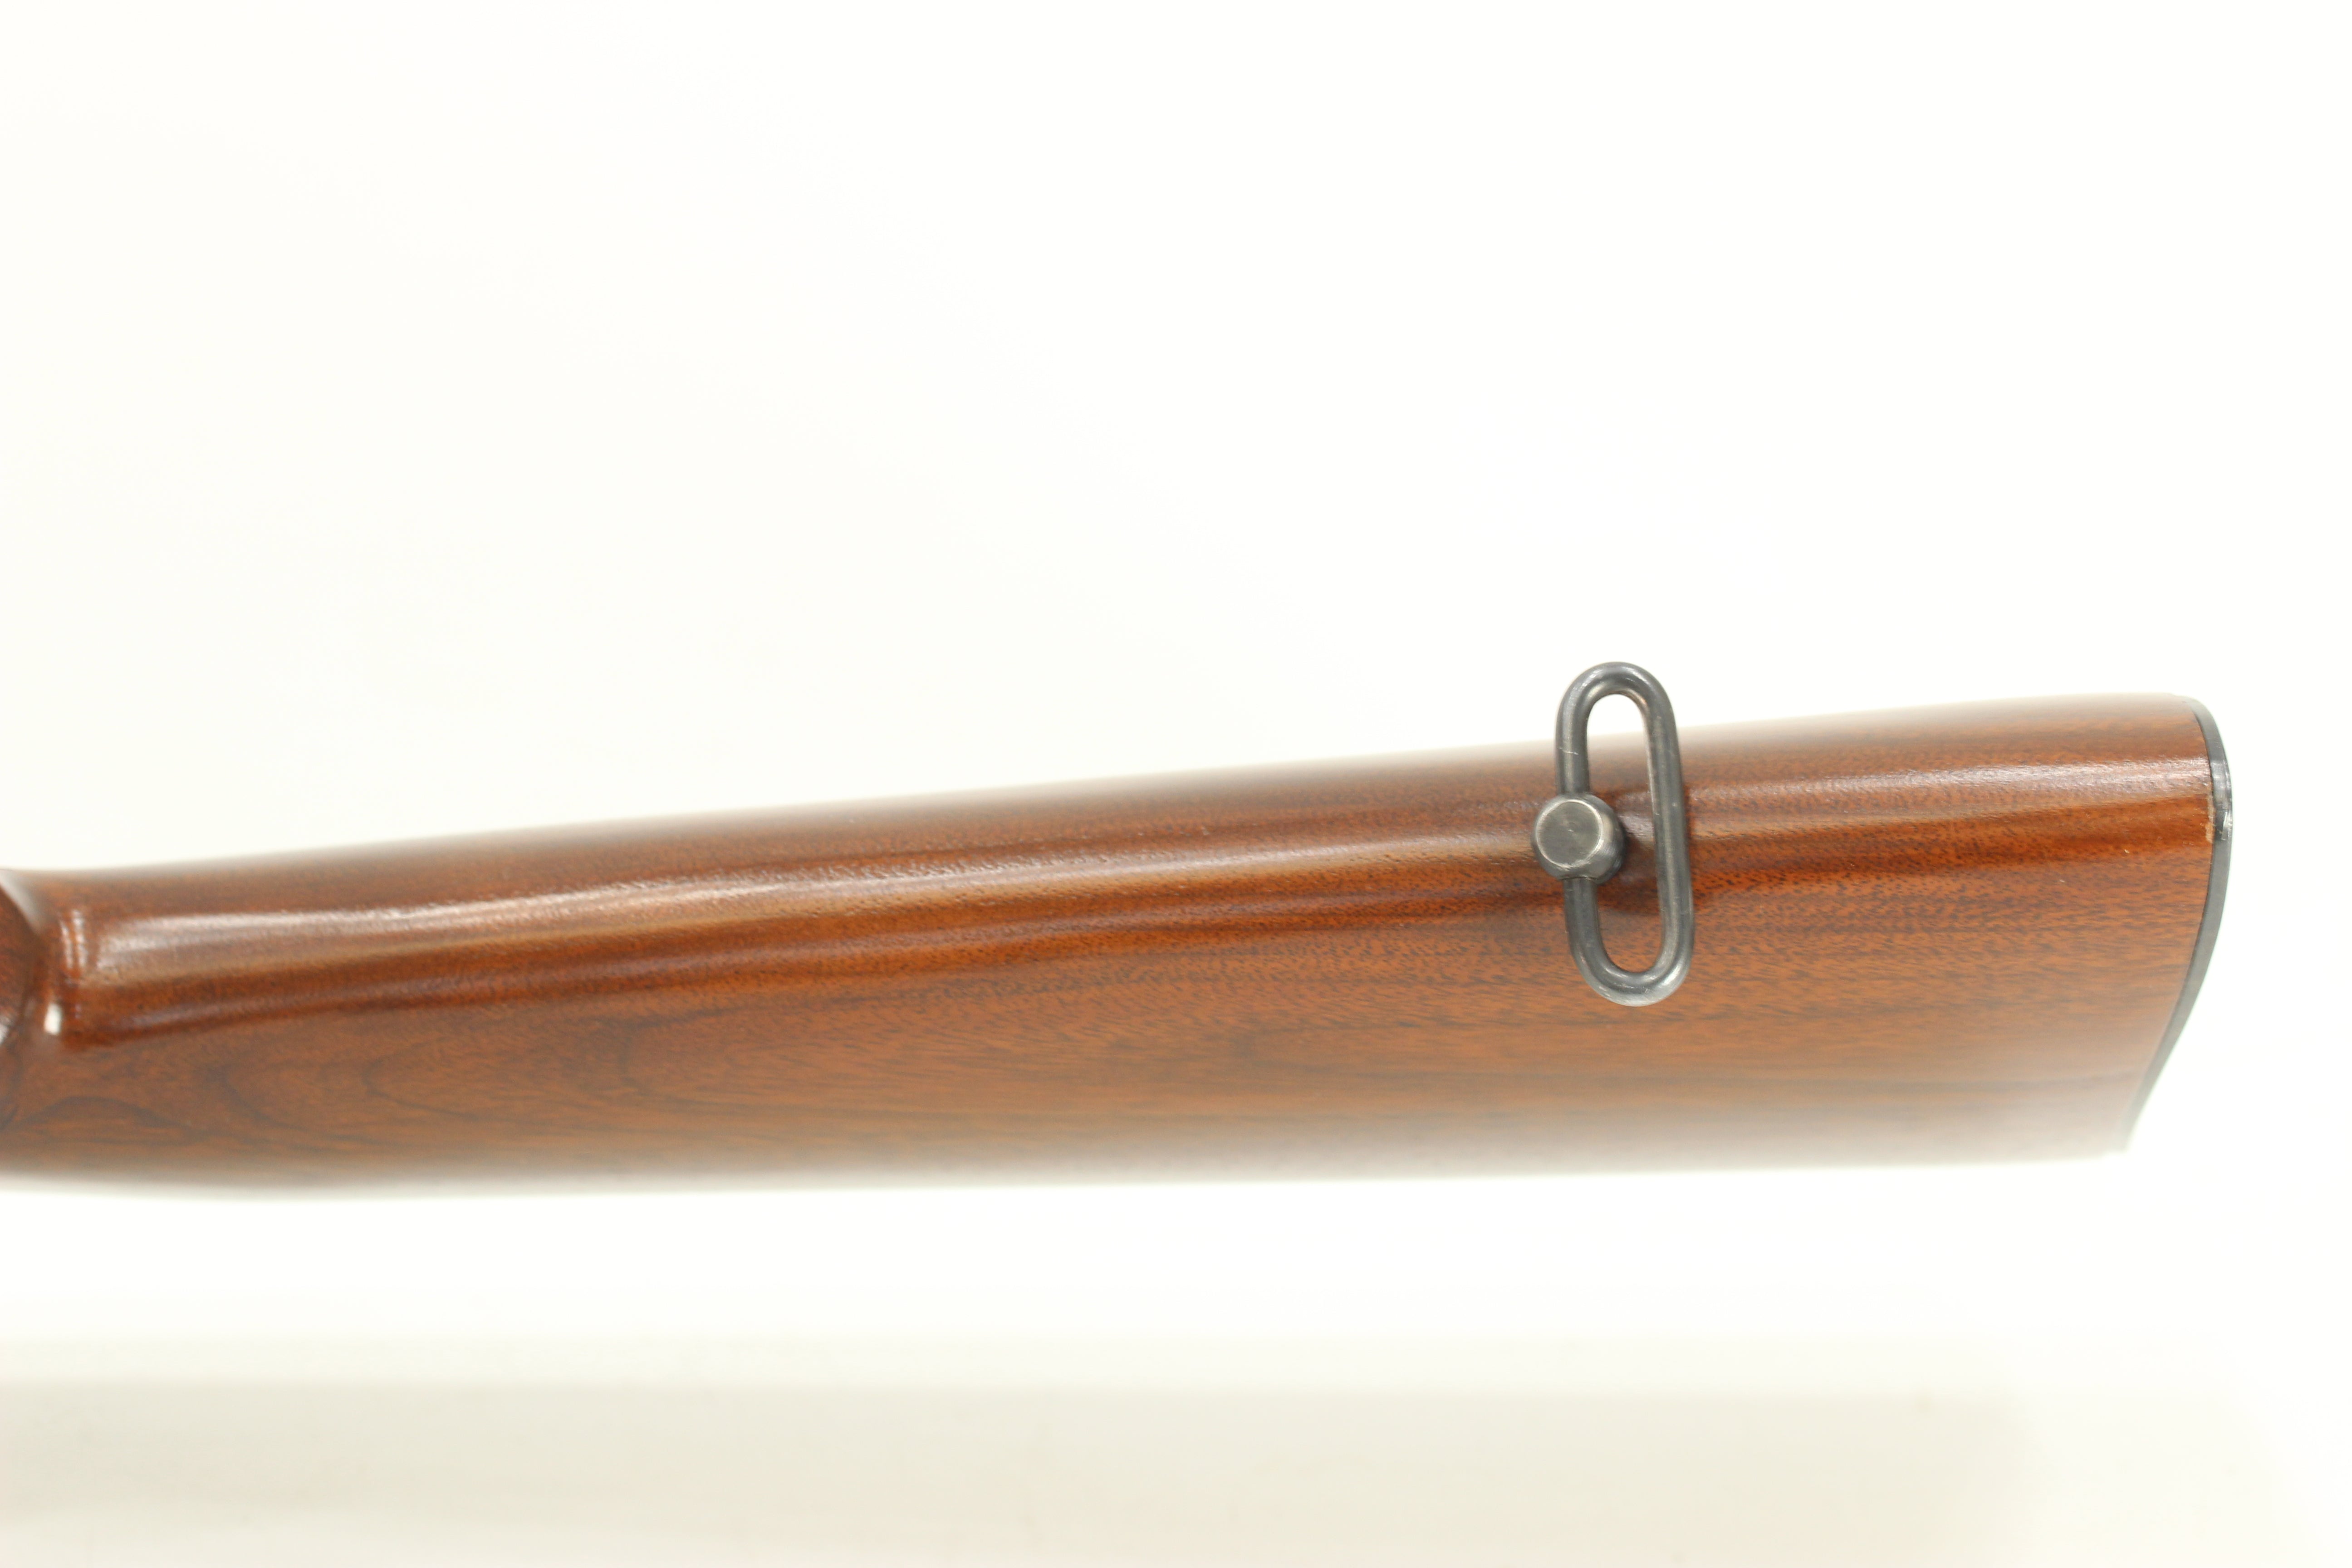 .30 Gov't '06 Standard Rifle - 1936 - Serial Number 237